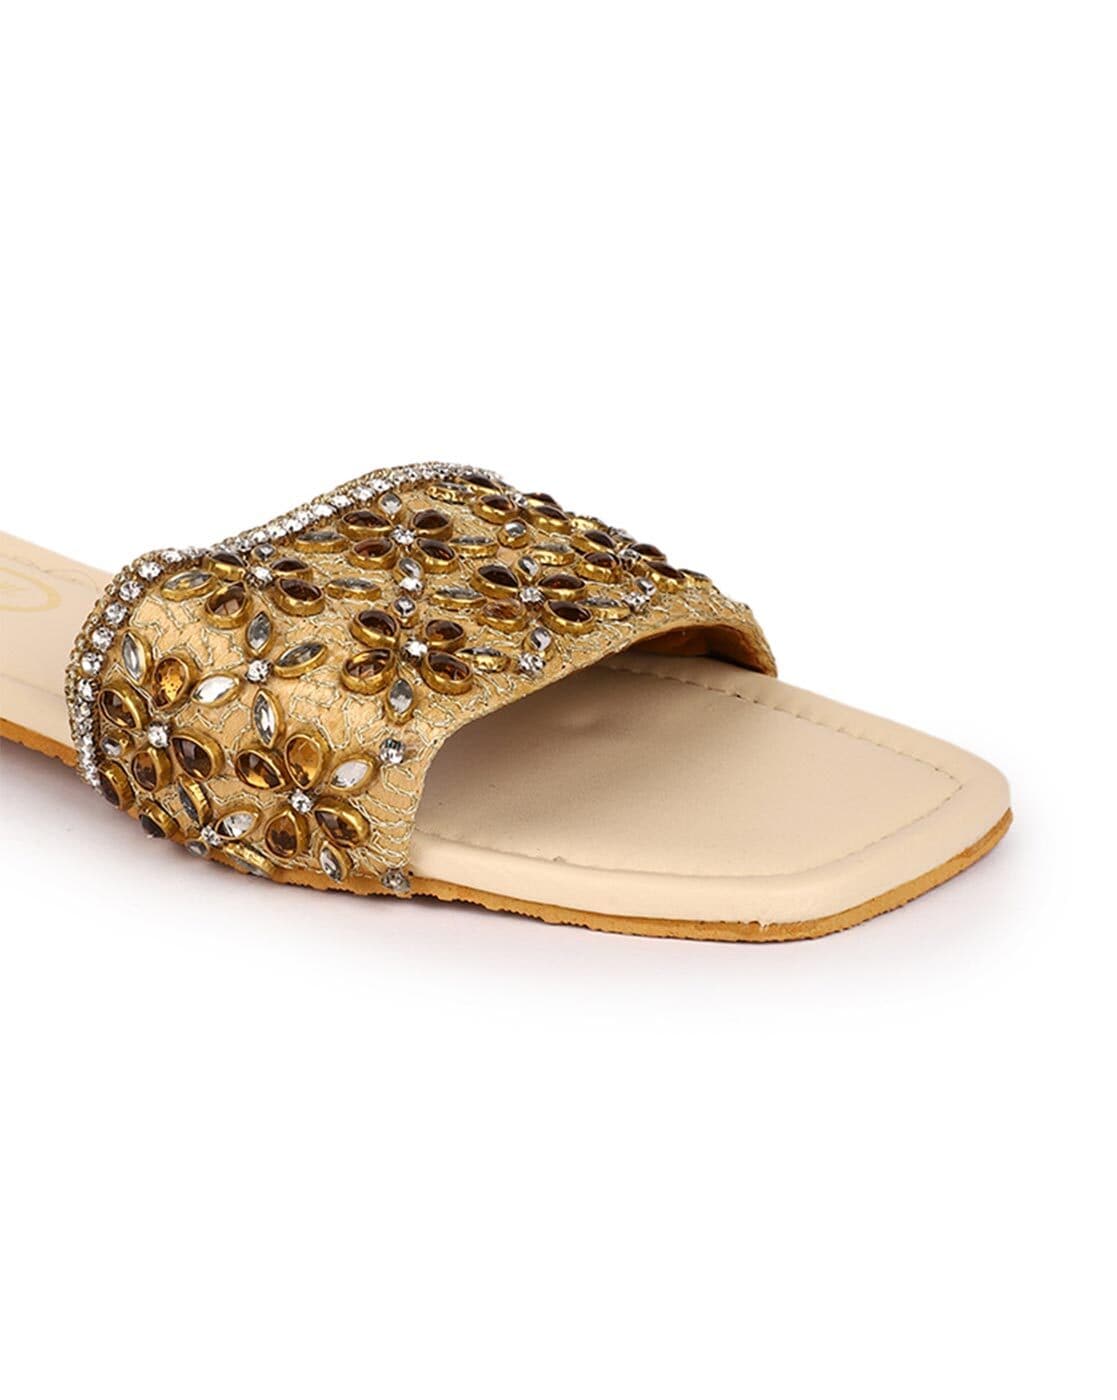 Buy Gold Flat Sandals for Women by APRATIM Online | Ajio.com